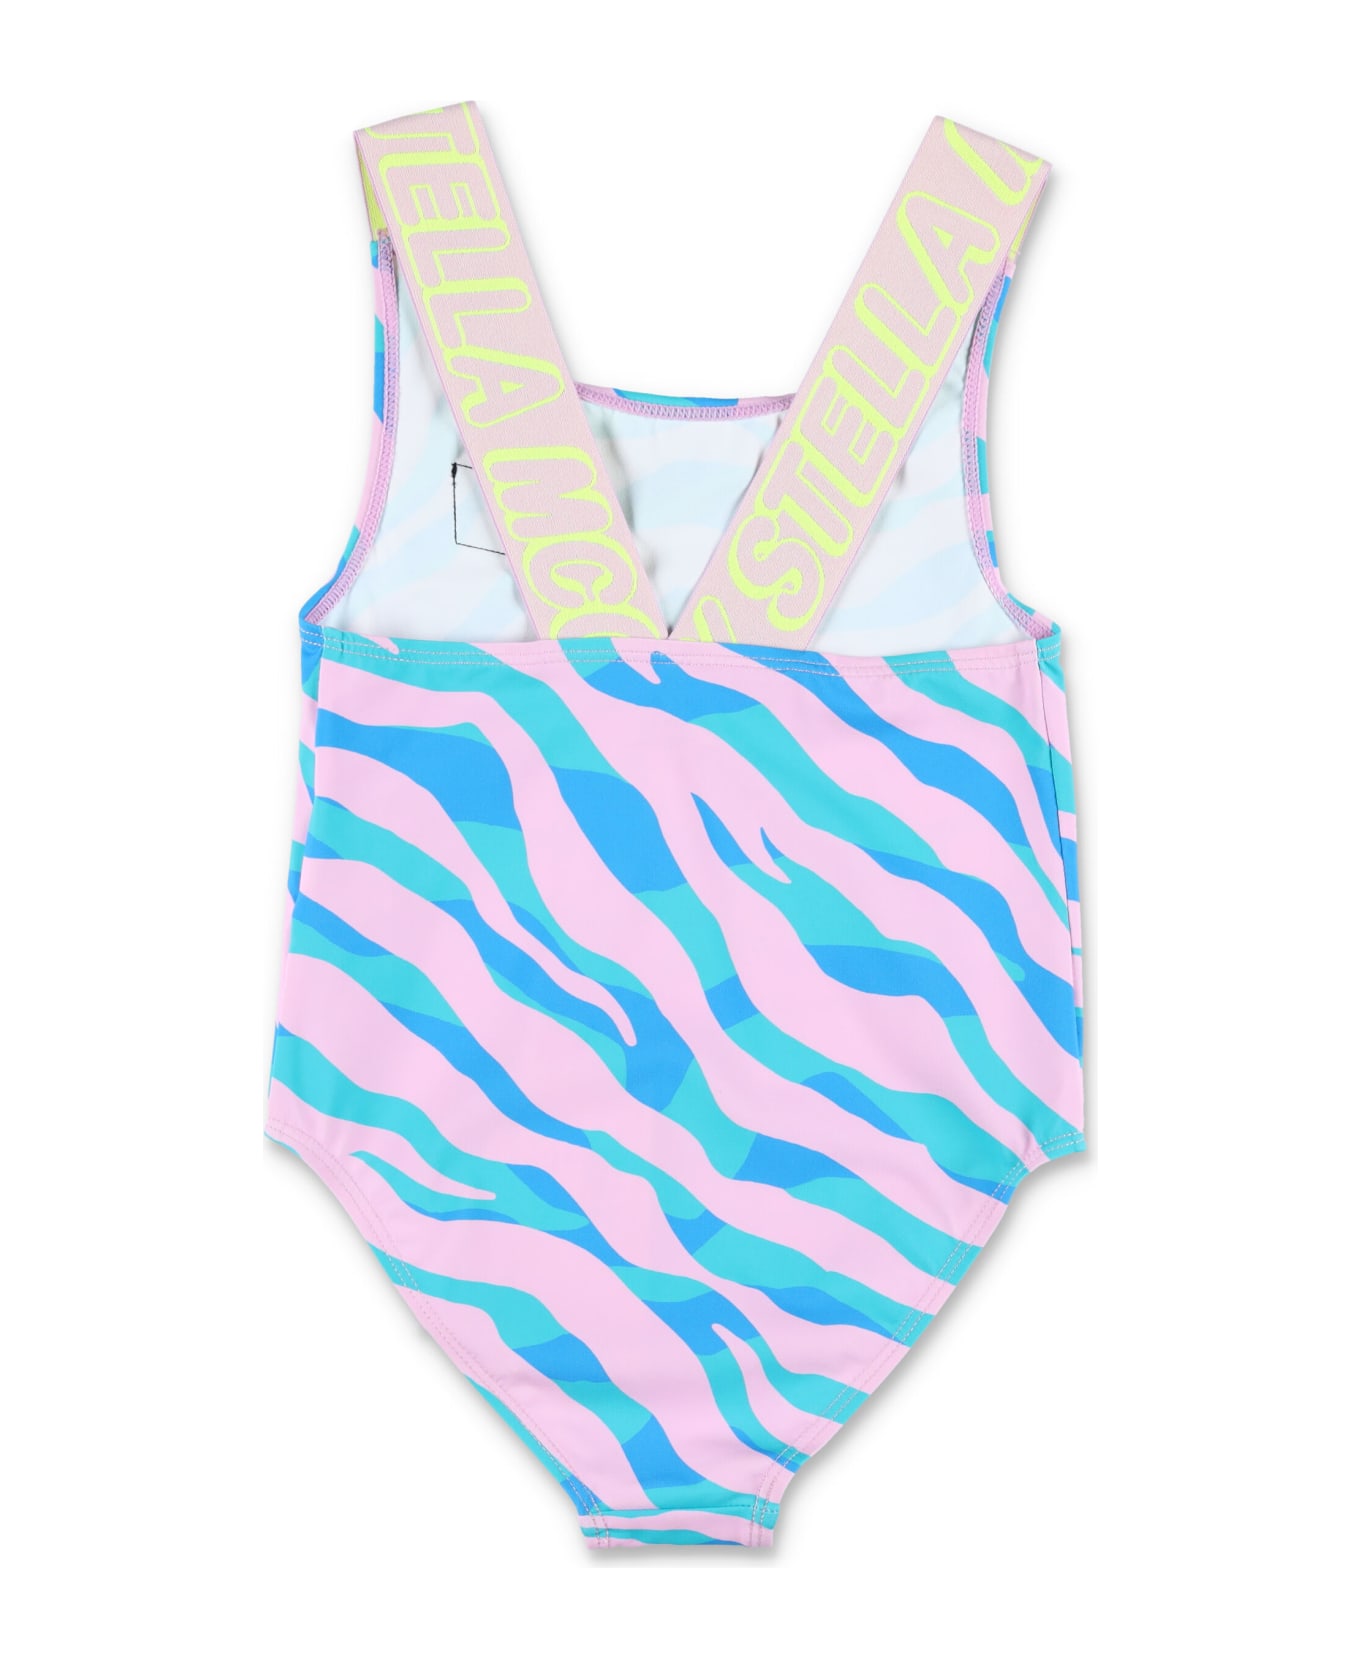 Stella McCartney Kids Zebra Print Swimsuit - BLUE MULTICOLOR